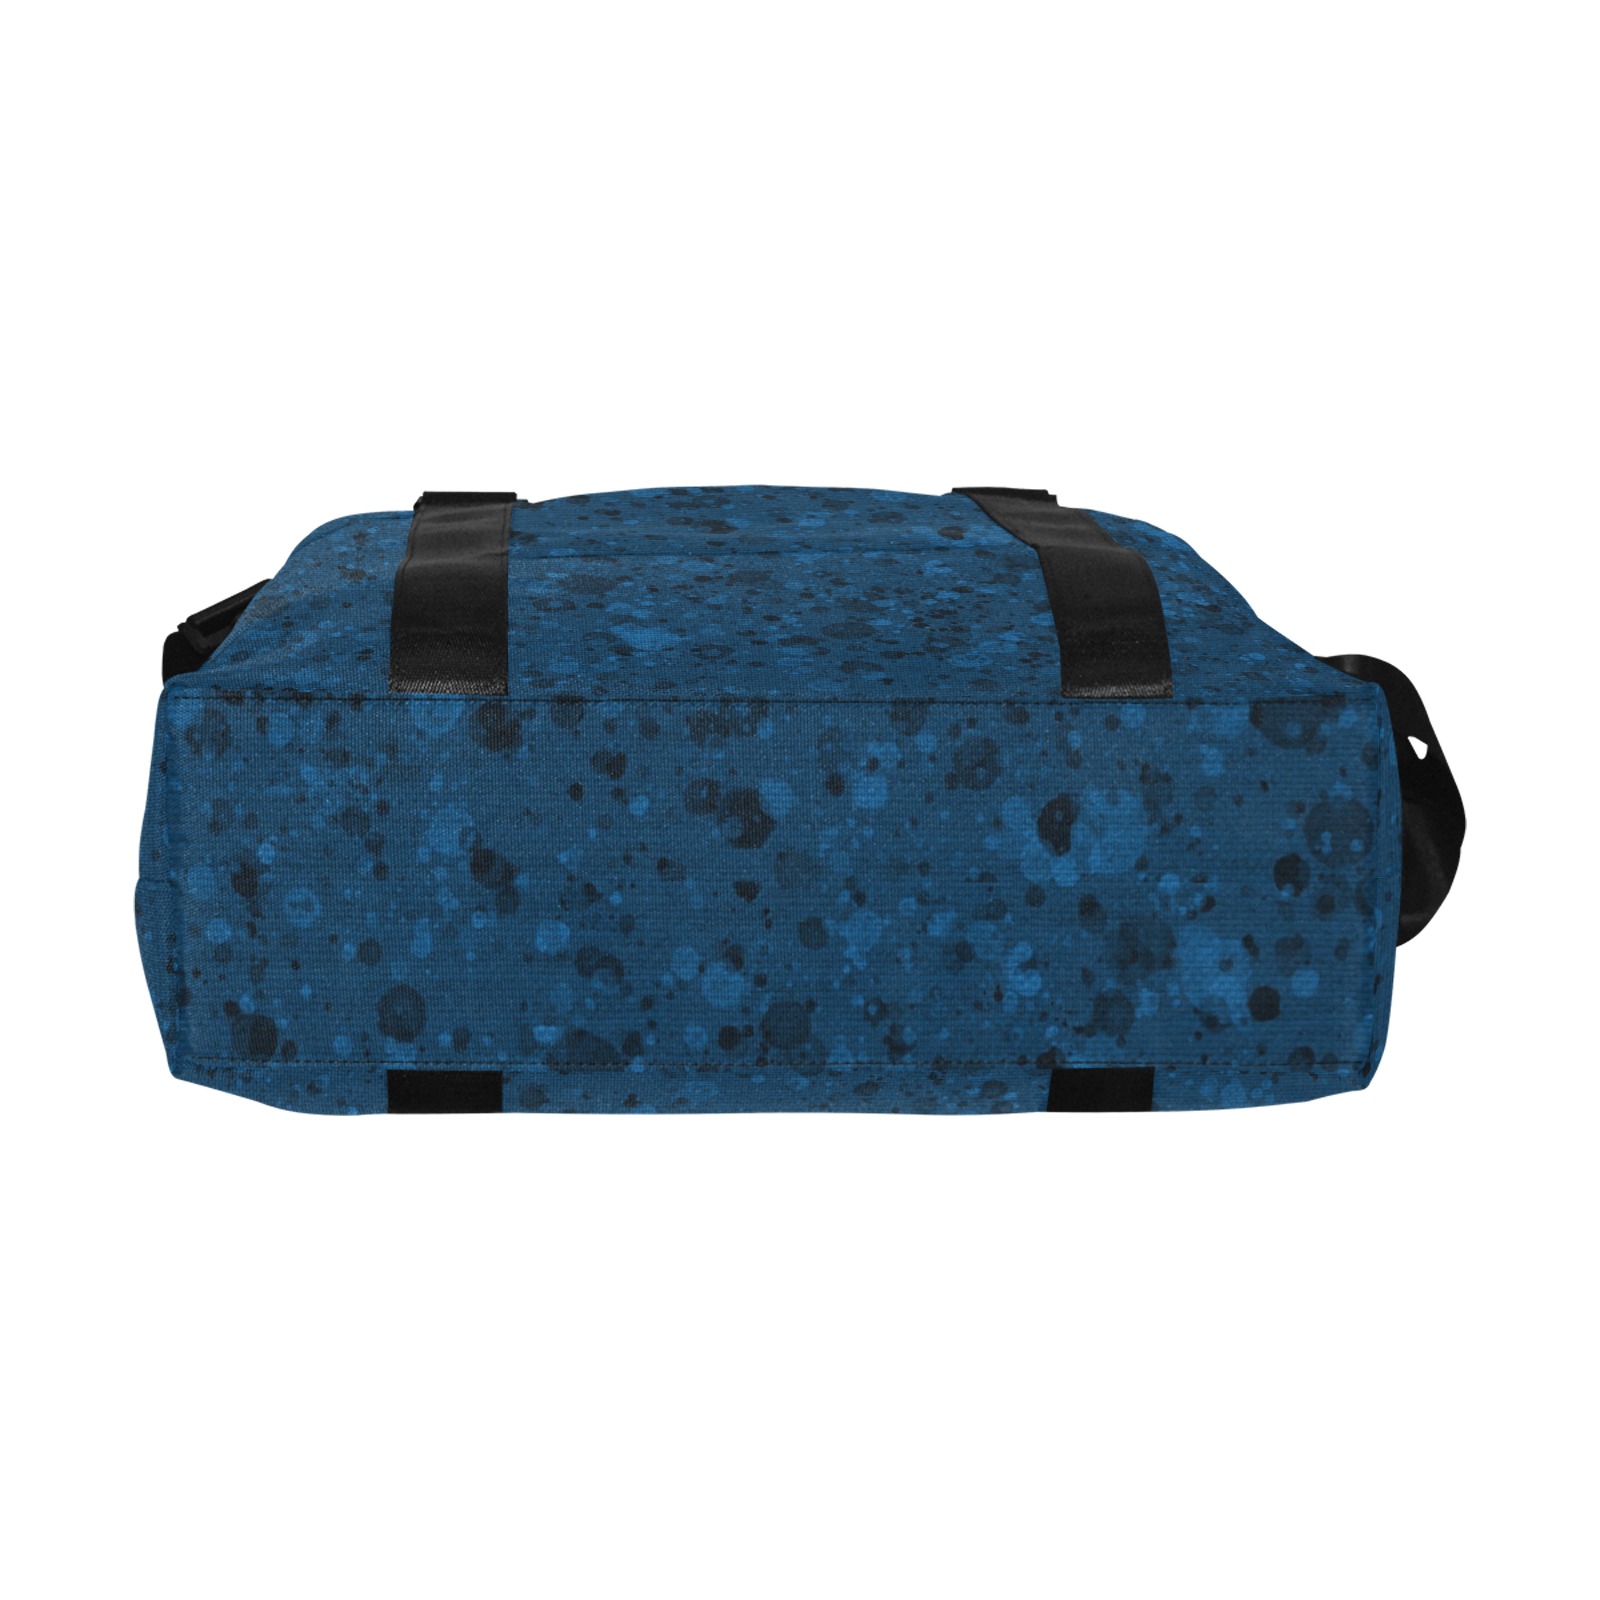 Royal blue Large Capacity Duffle Bag (Model 1715)